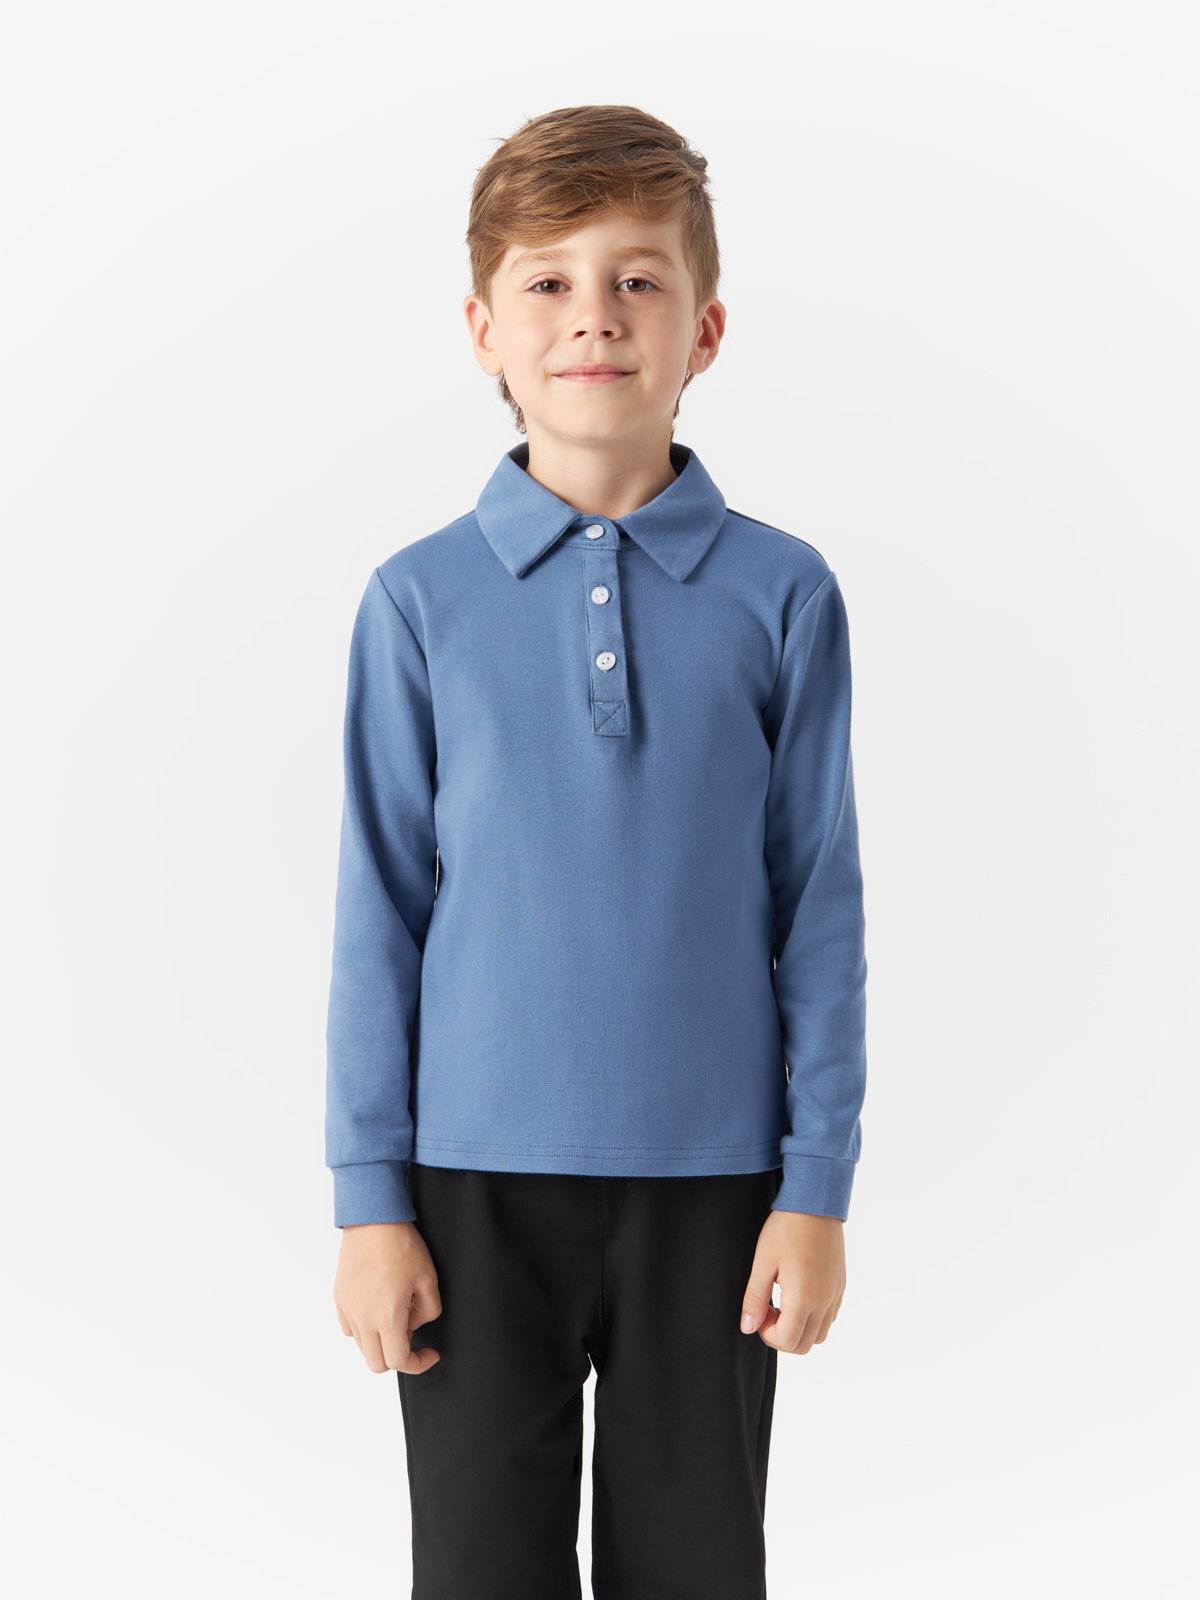 Рубашка Yiwu Xflot Supply Chain детская, BS-8blue, размер 110 см